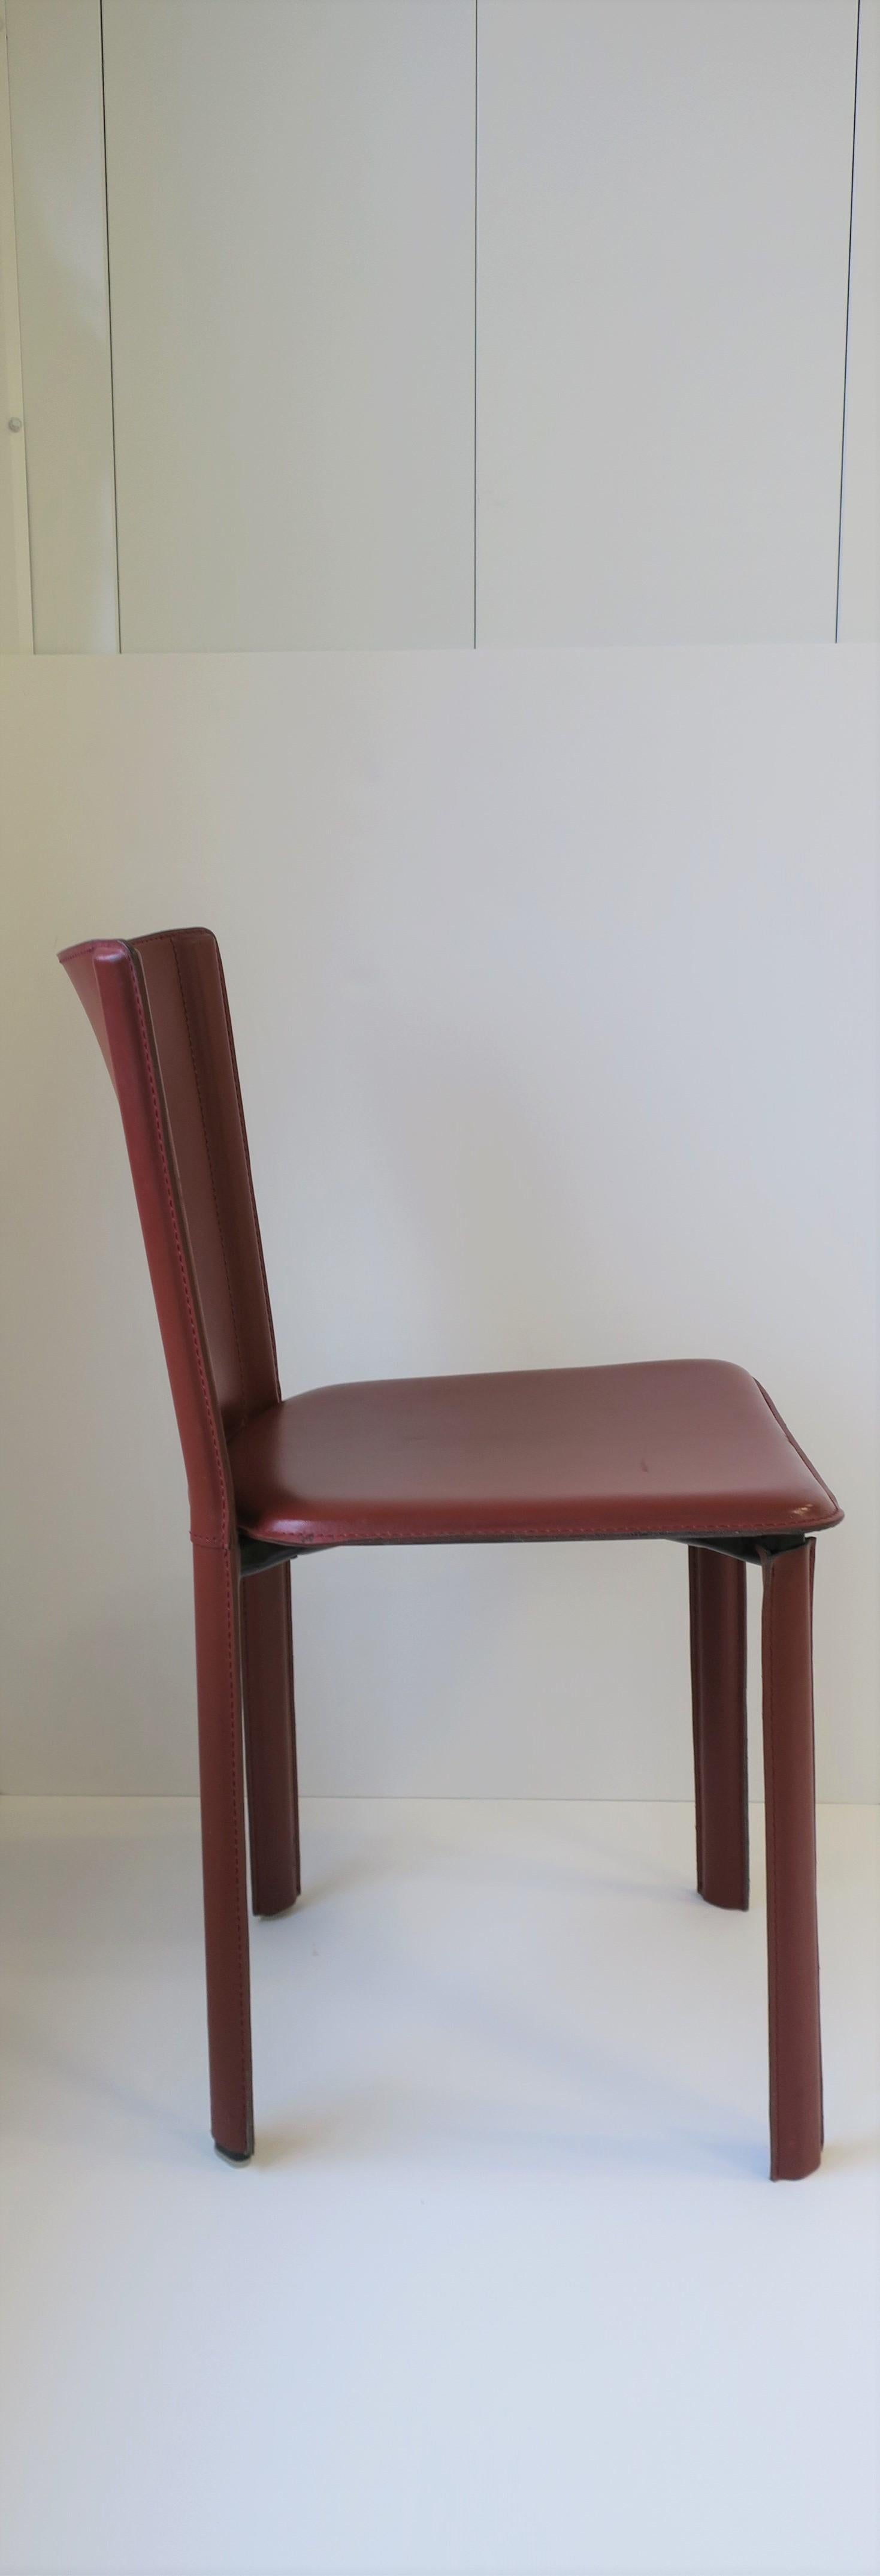 Designer Italian Red Burgundy Leather Side or Desk Chair by Frag 1